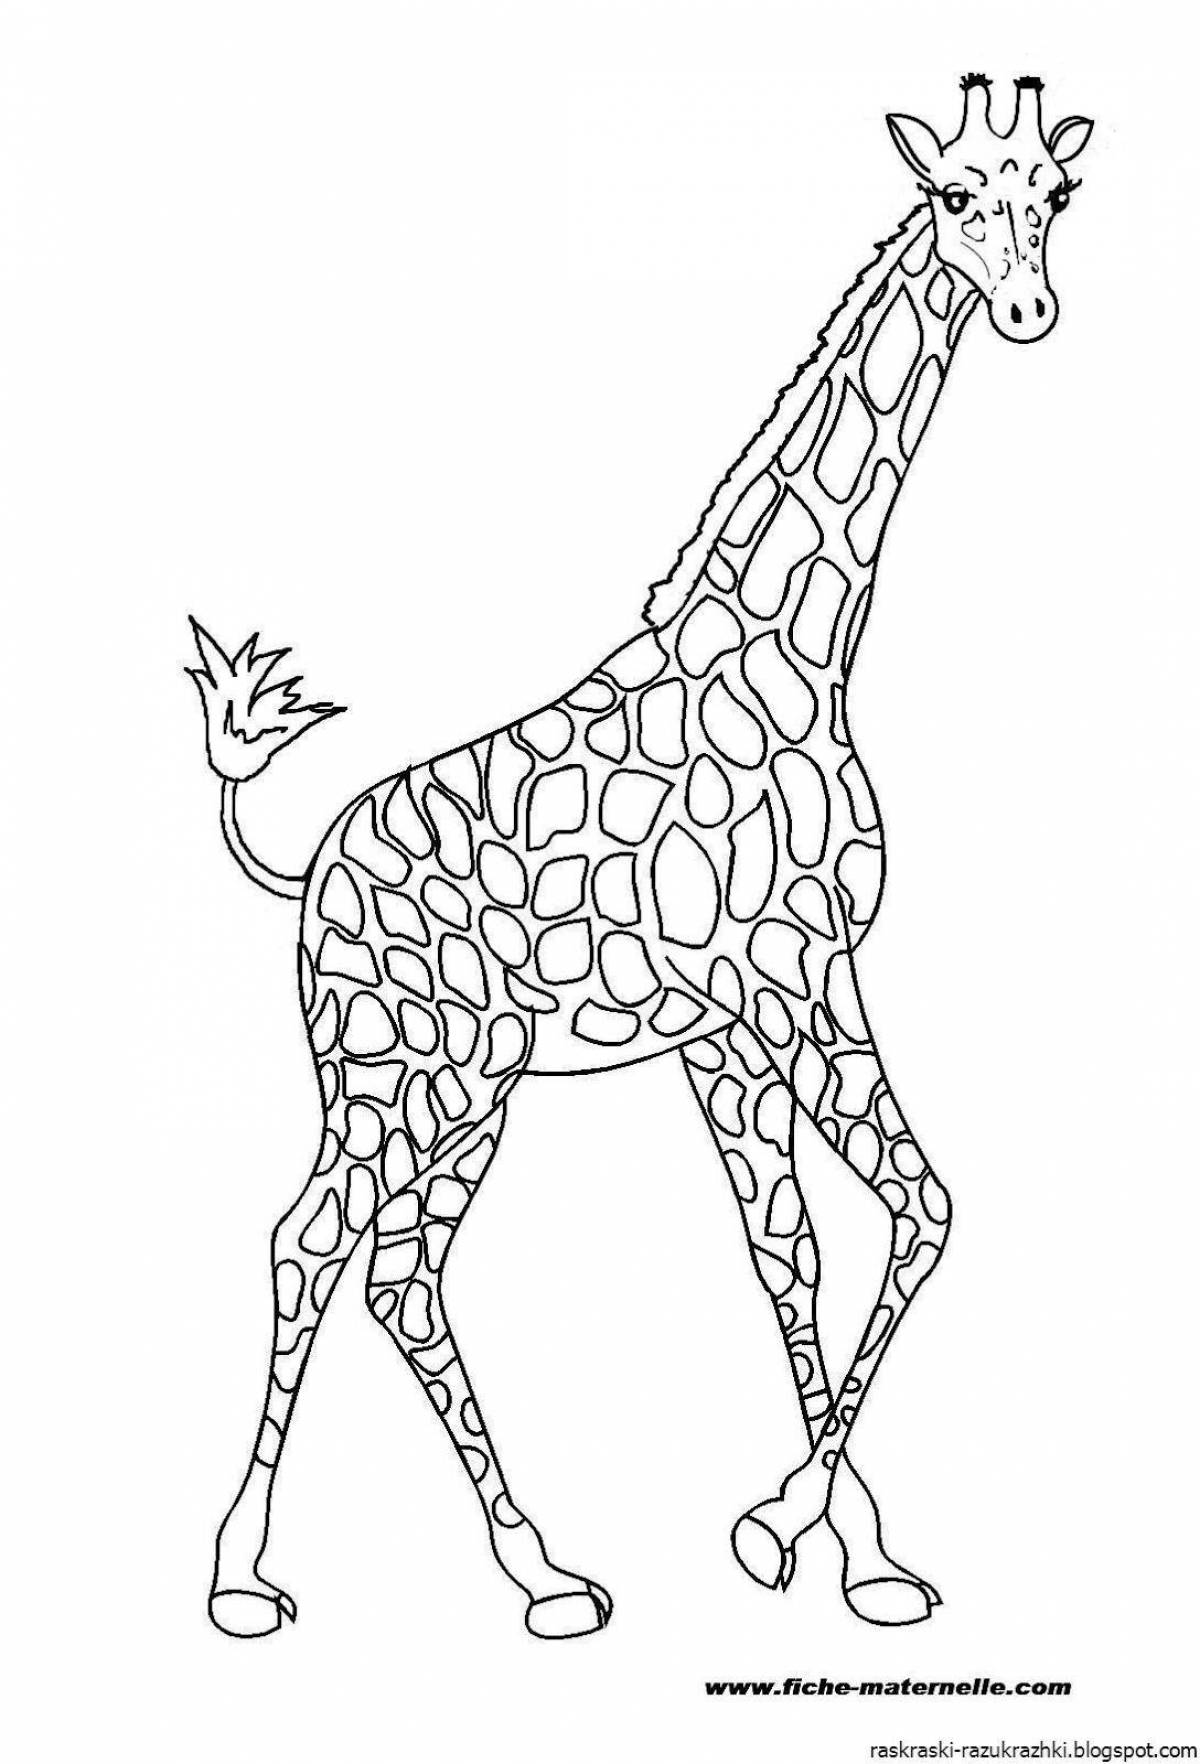 Children's coloring giraffe